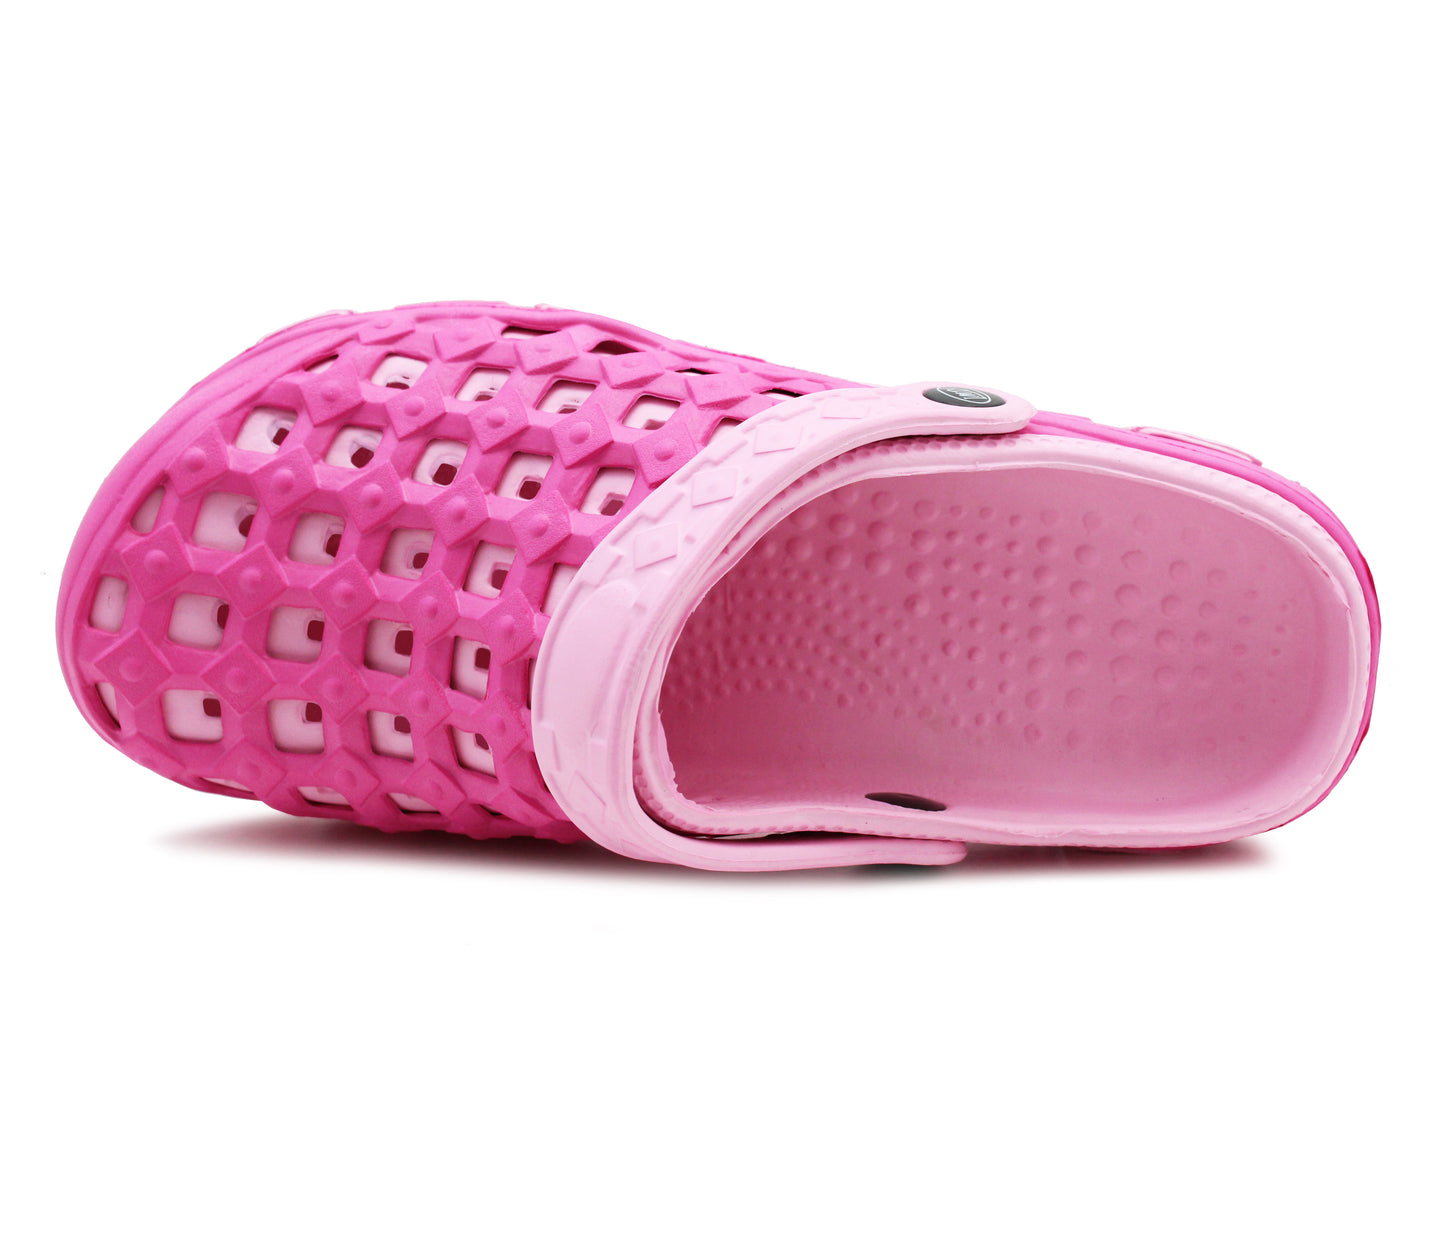 Womens Clogs Lightweight Fuchsia Pink EVA Breathable Beach Summer Sandals Ladies Garden Hospital Shower Pool Shoes